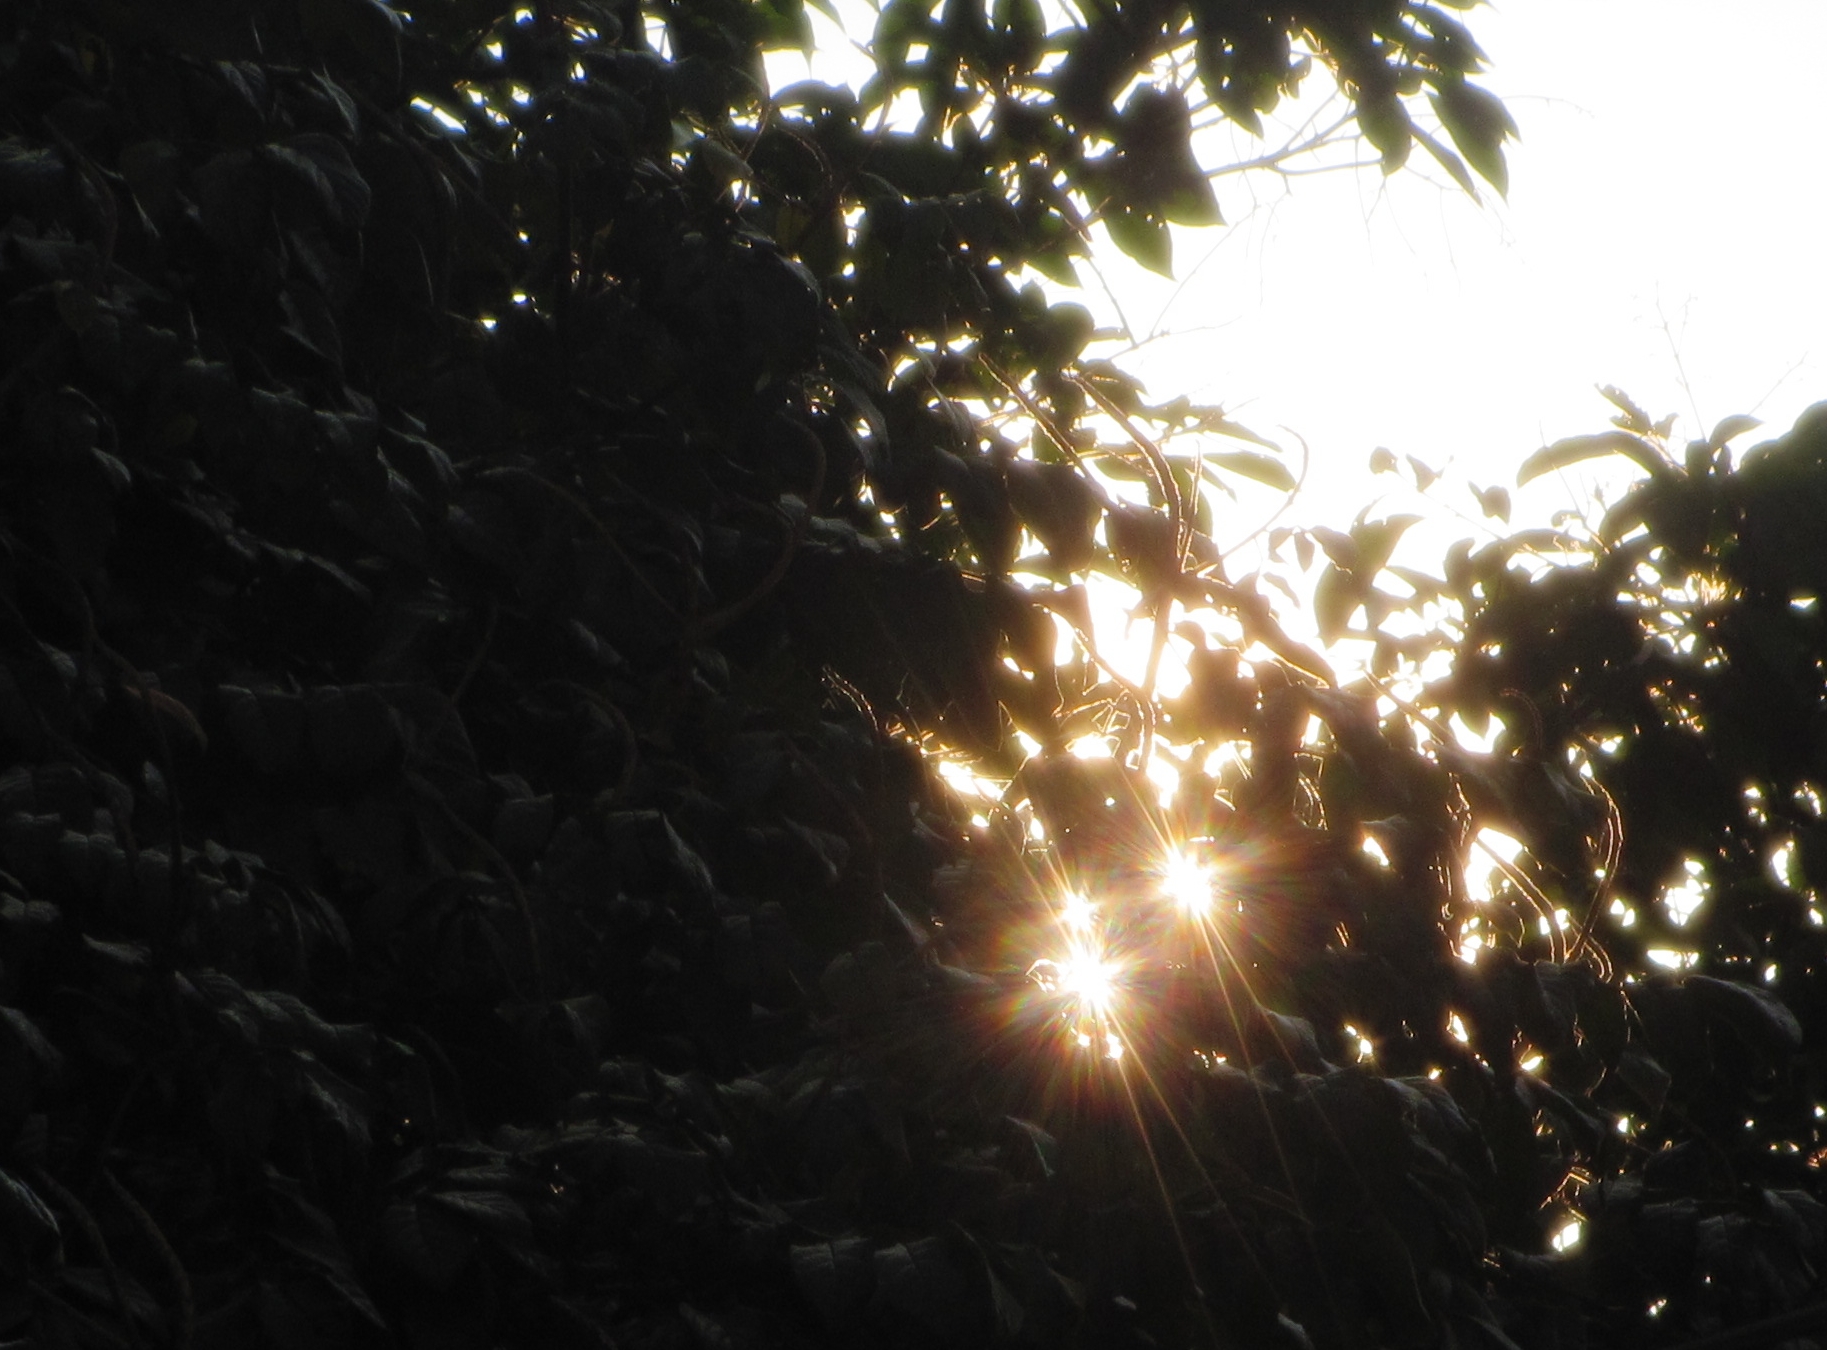 the sun peeks through the leaves of trees